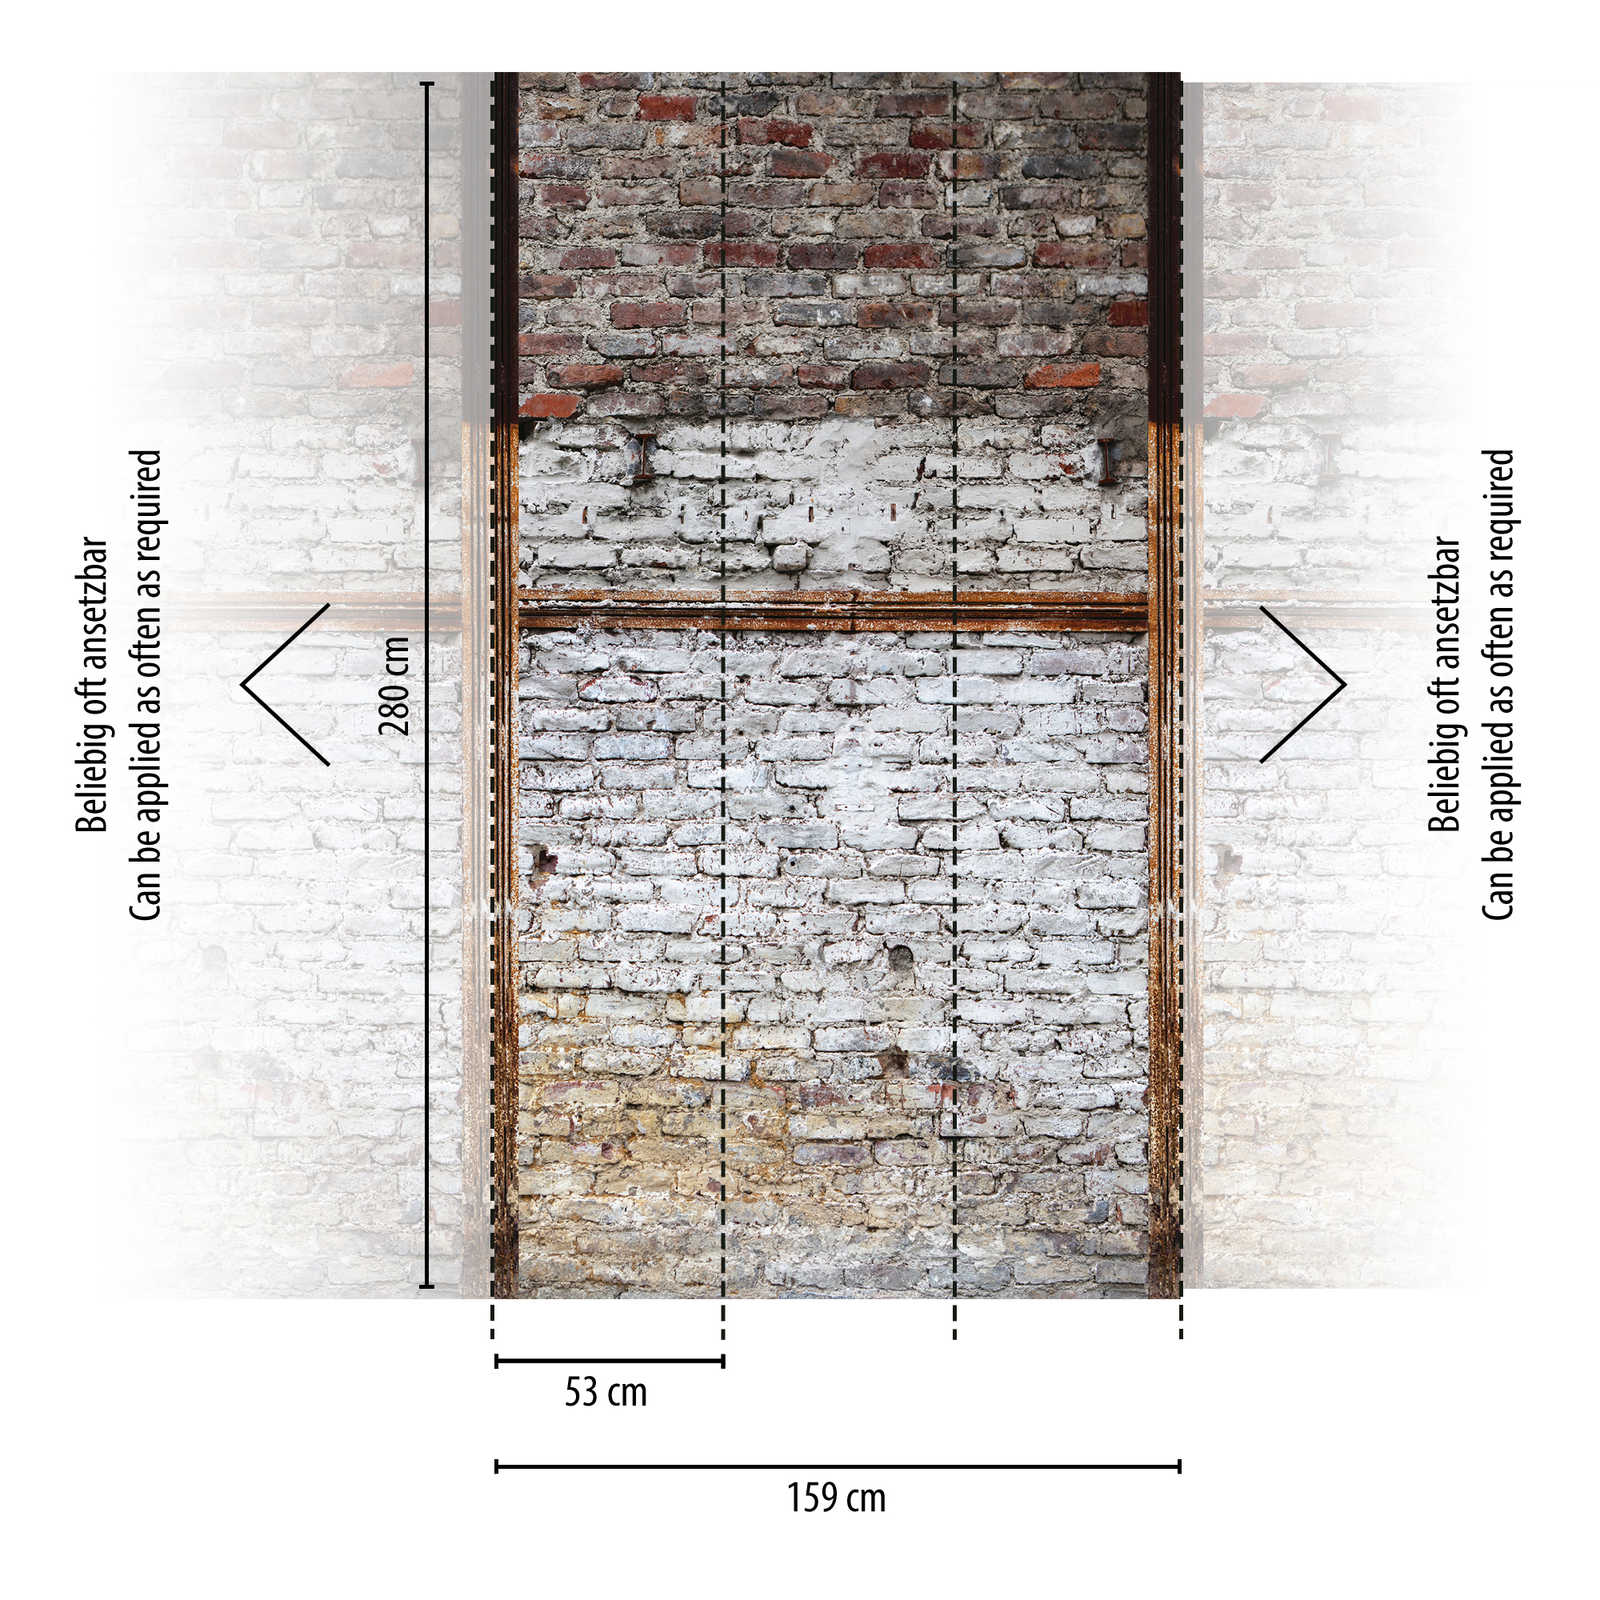             carte da parati novità | motivo 3d carta da parati design industriale muro di pietra rustico
        